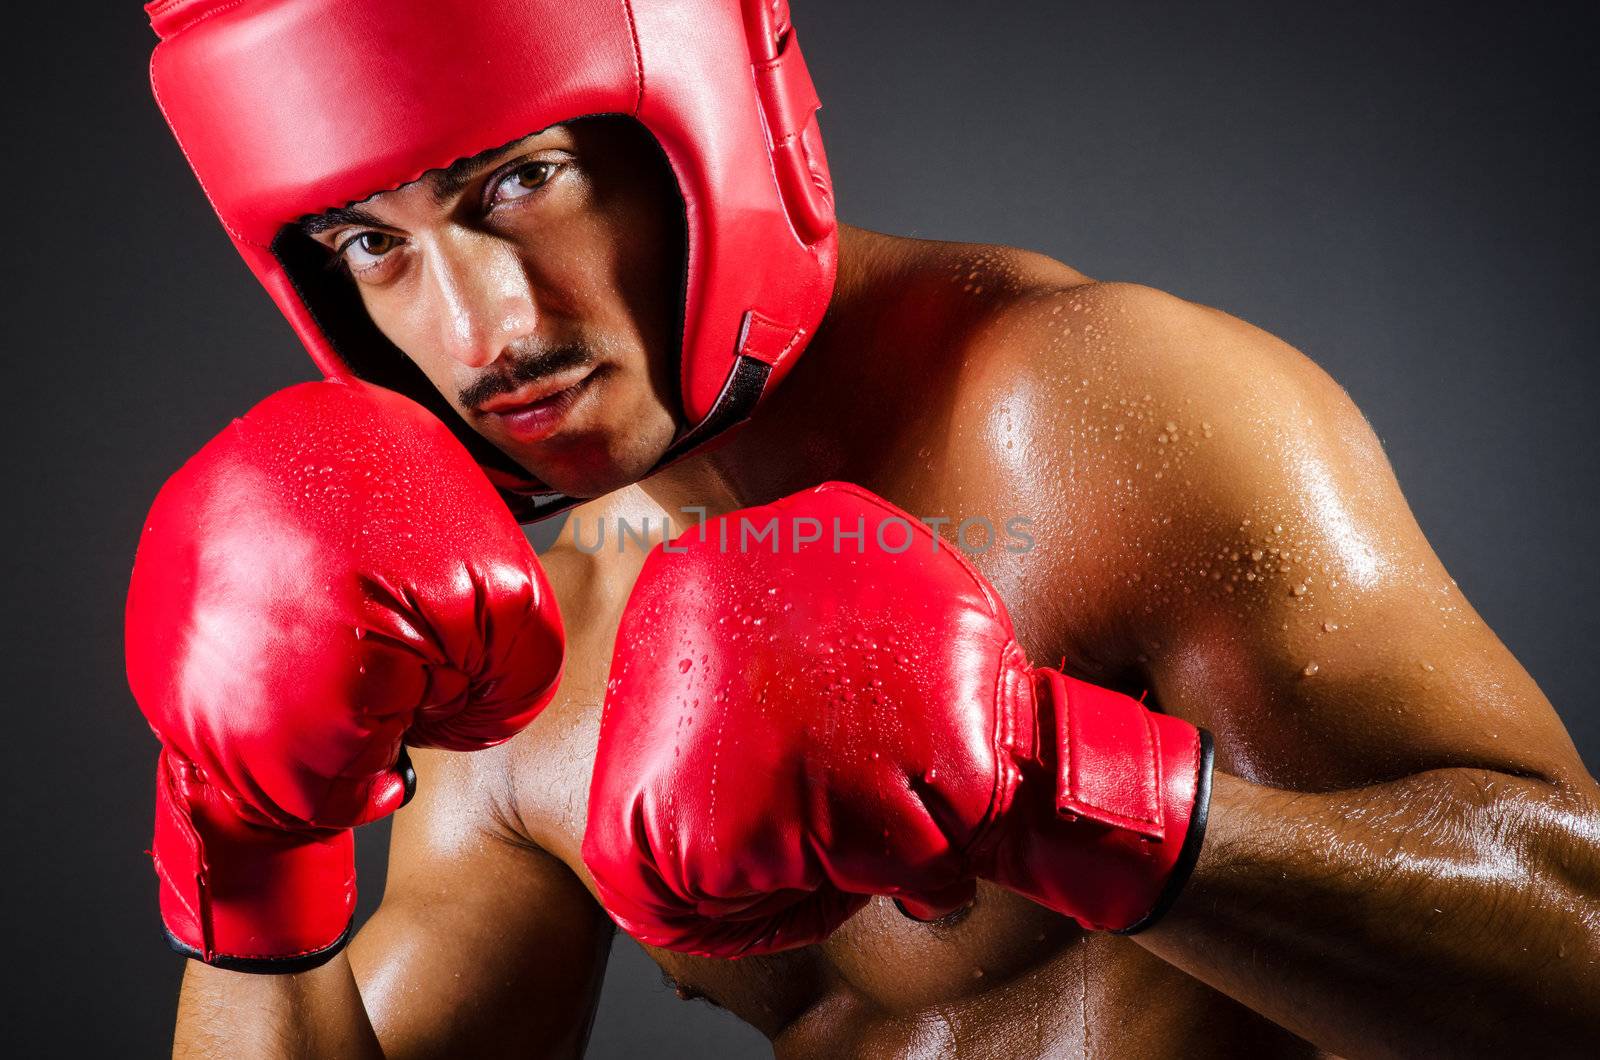 Muscular boxer in studio shooting by Elnur